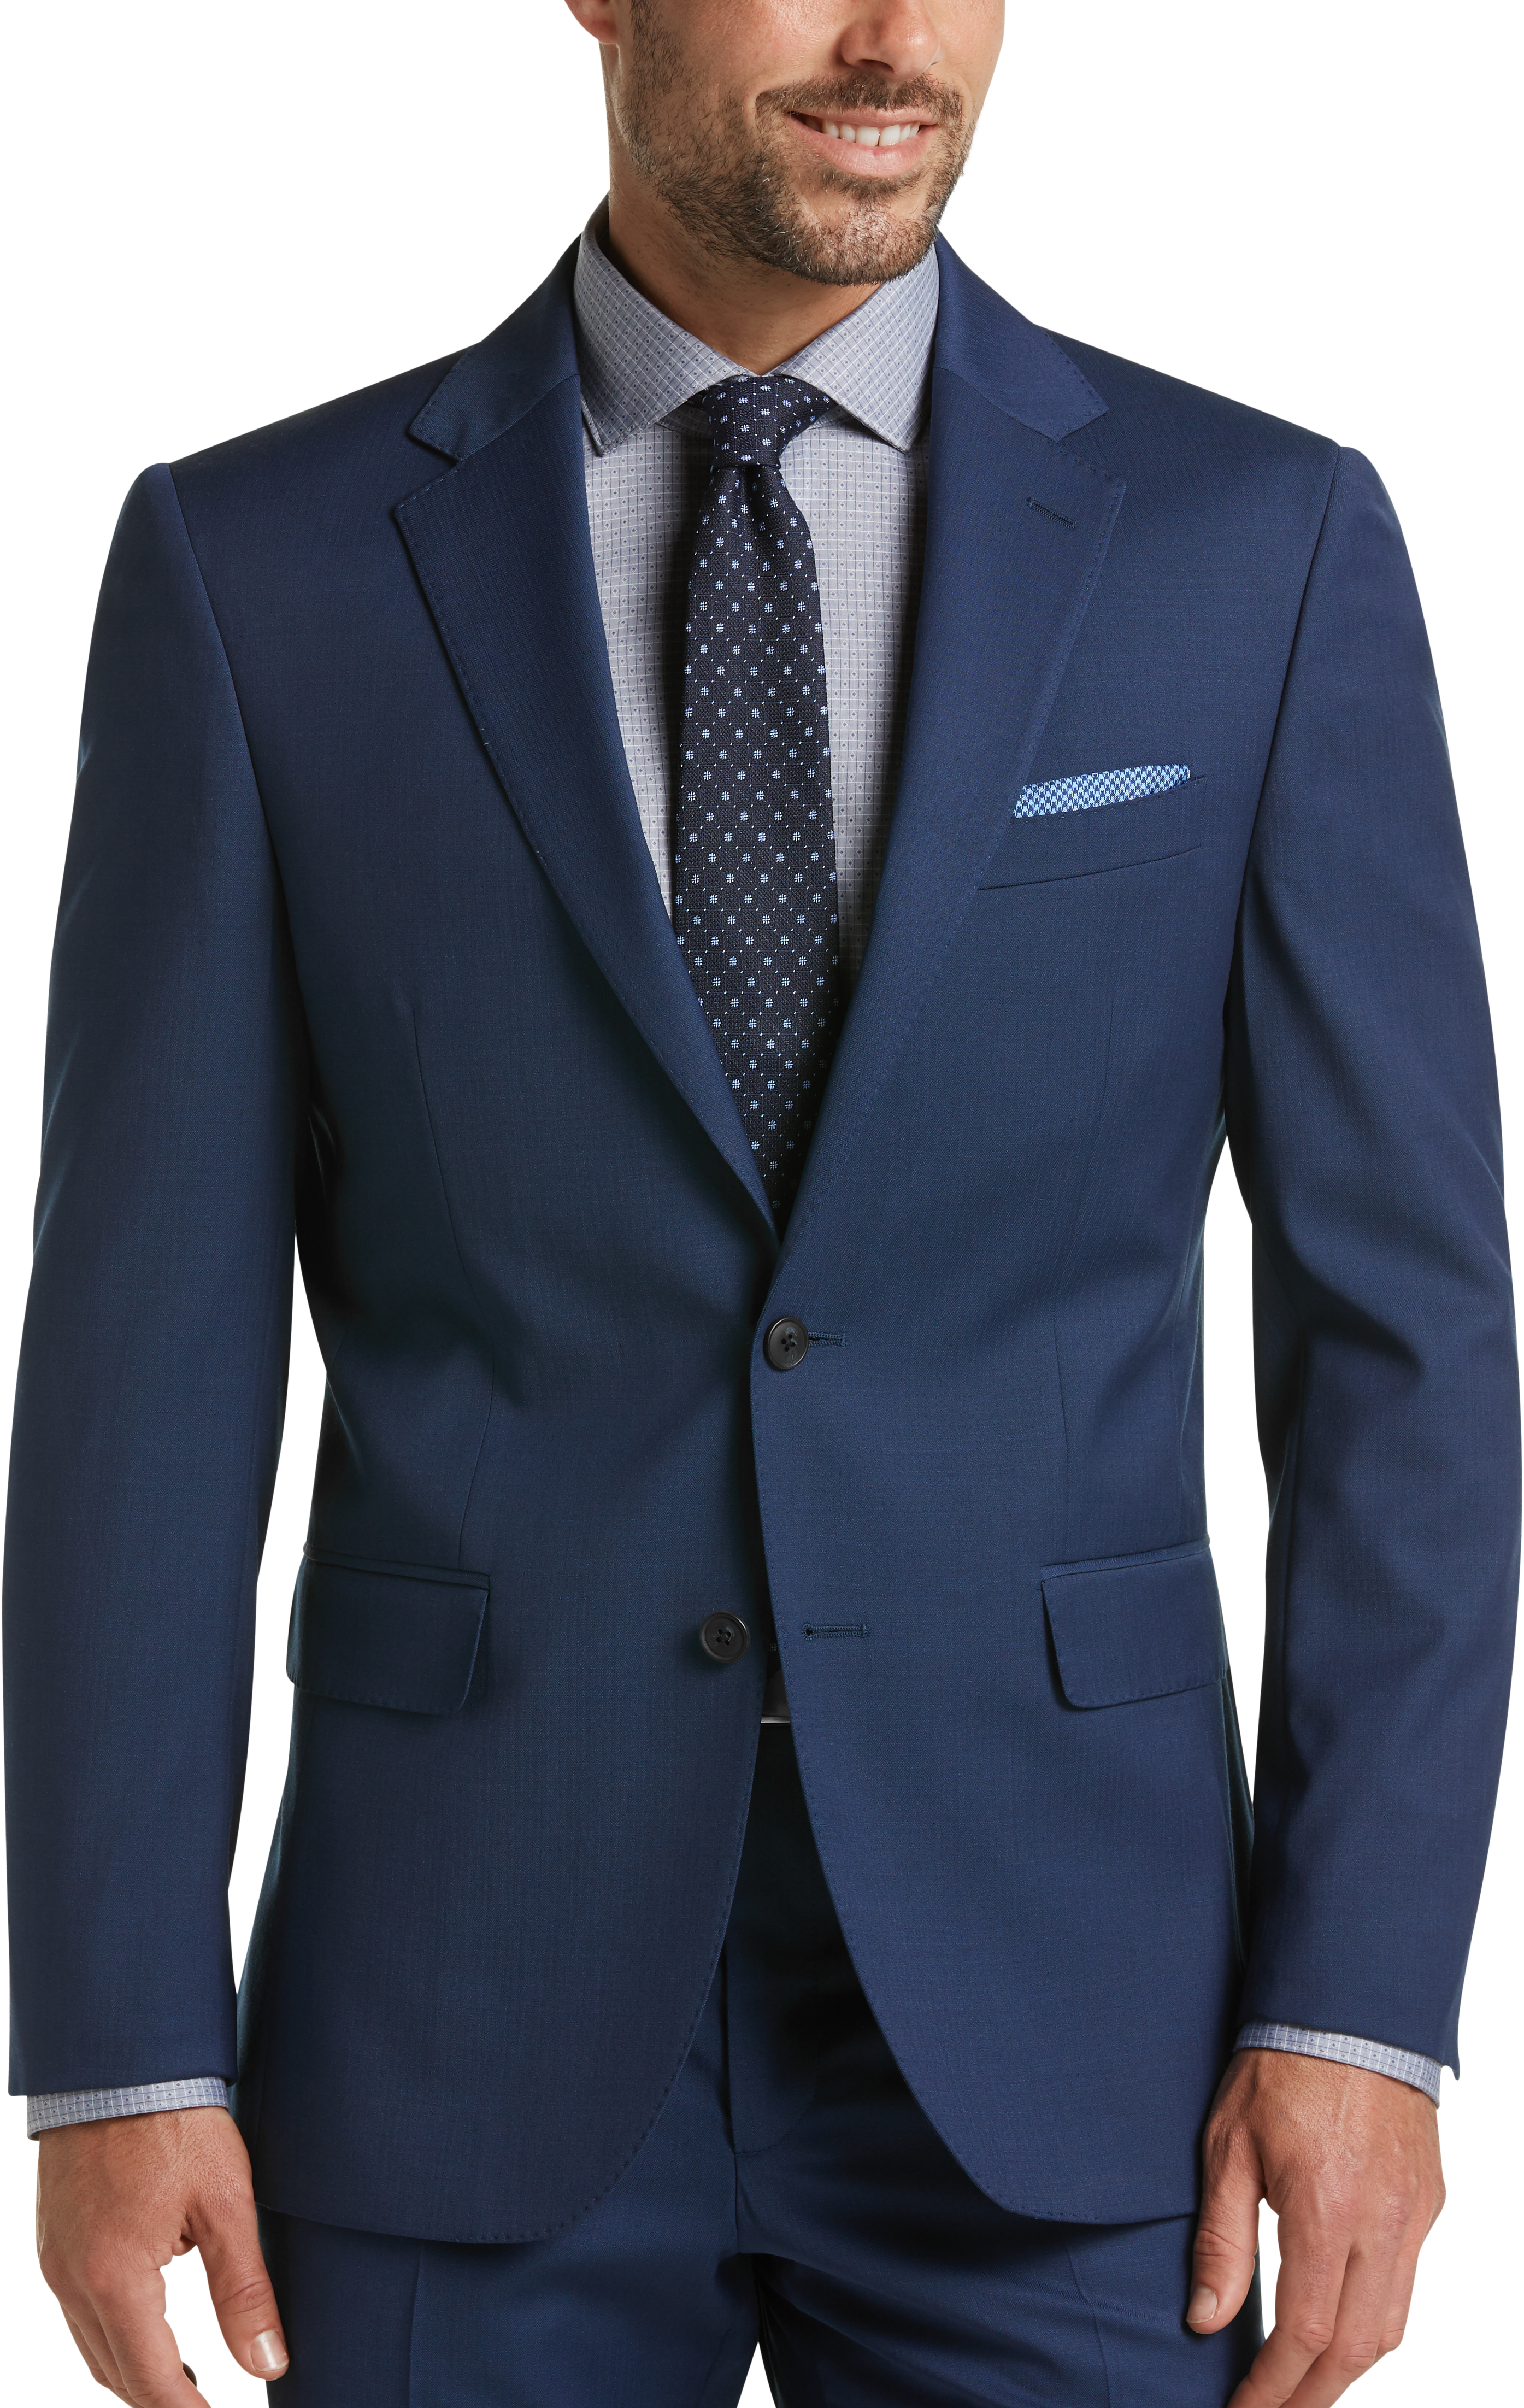 JOE Joseph Abboud Blue Herringbone Slim Fit Suit - Men's Sale | Men's ...